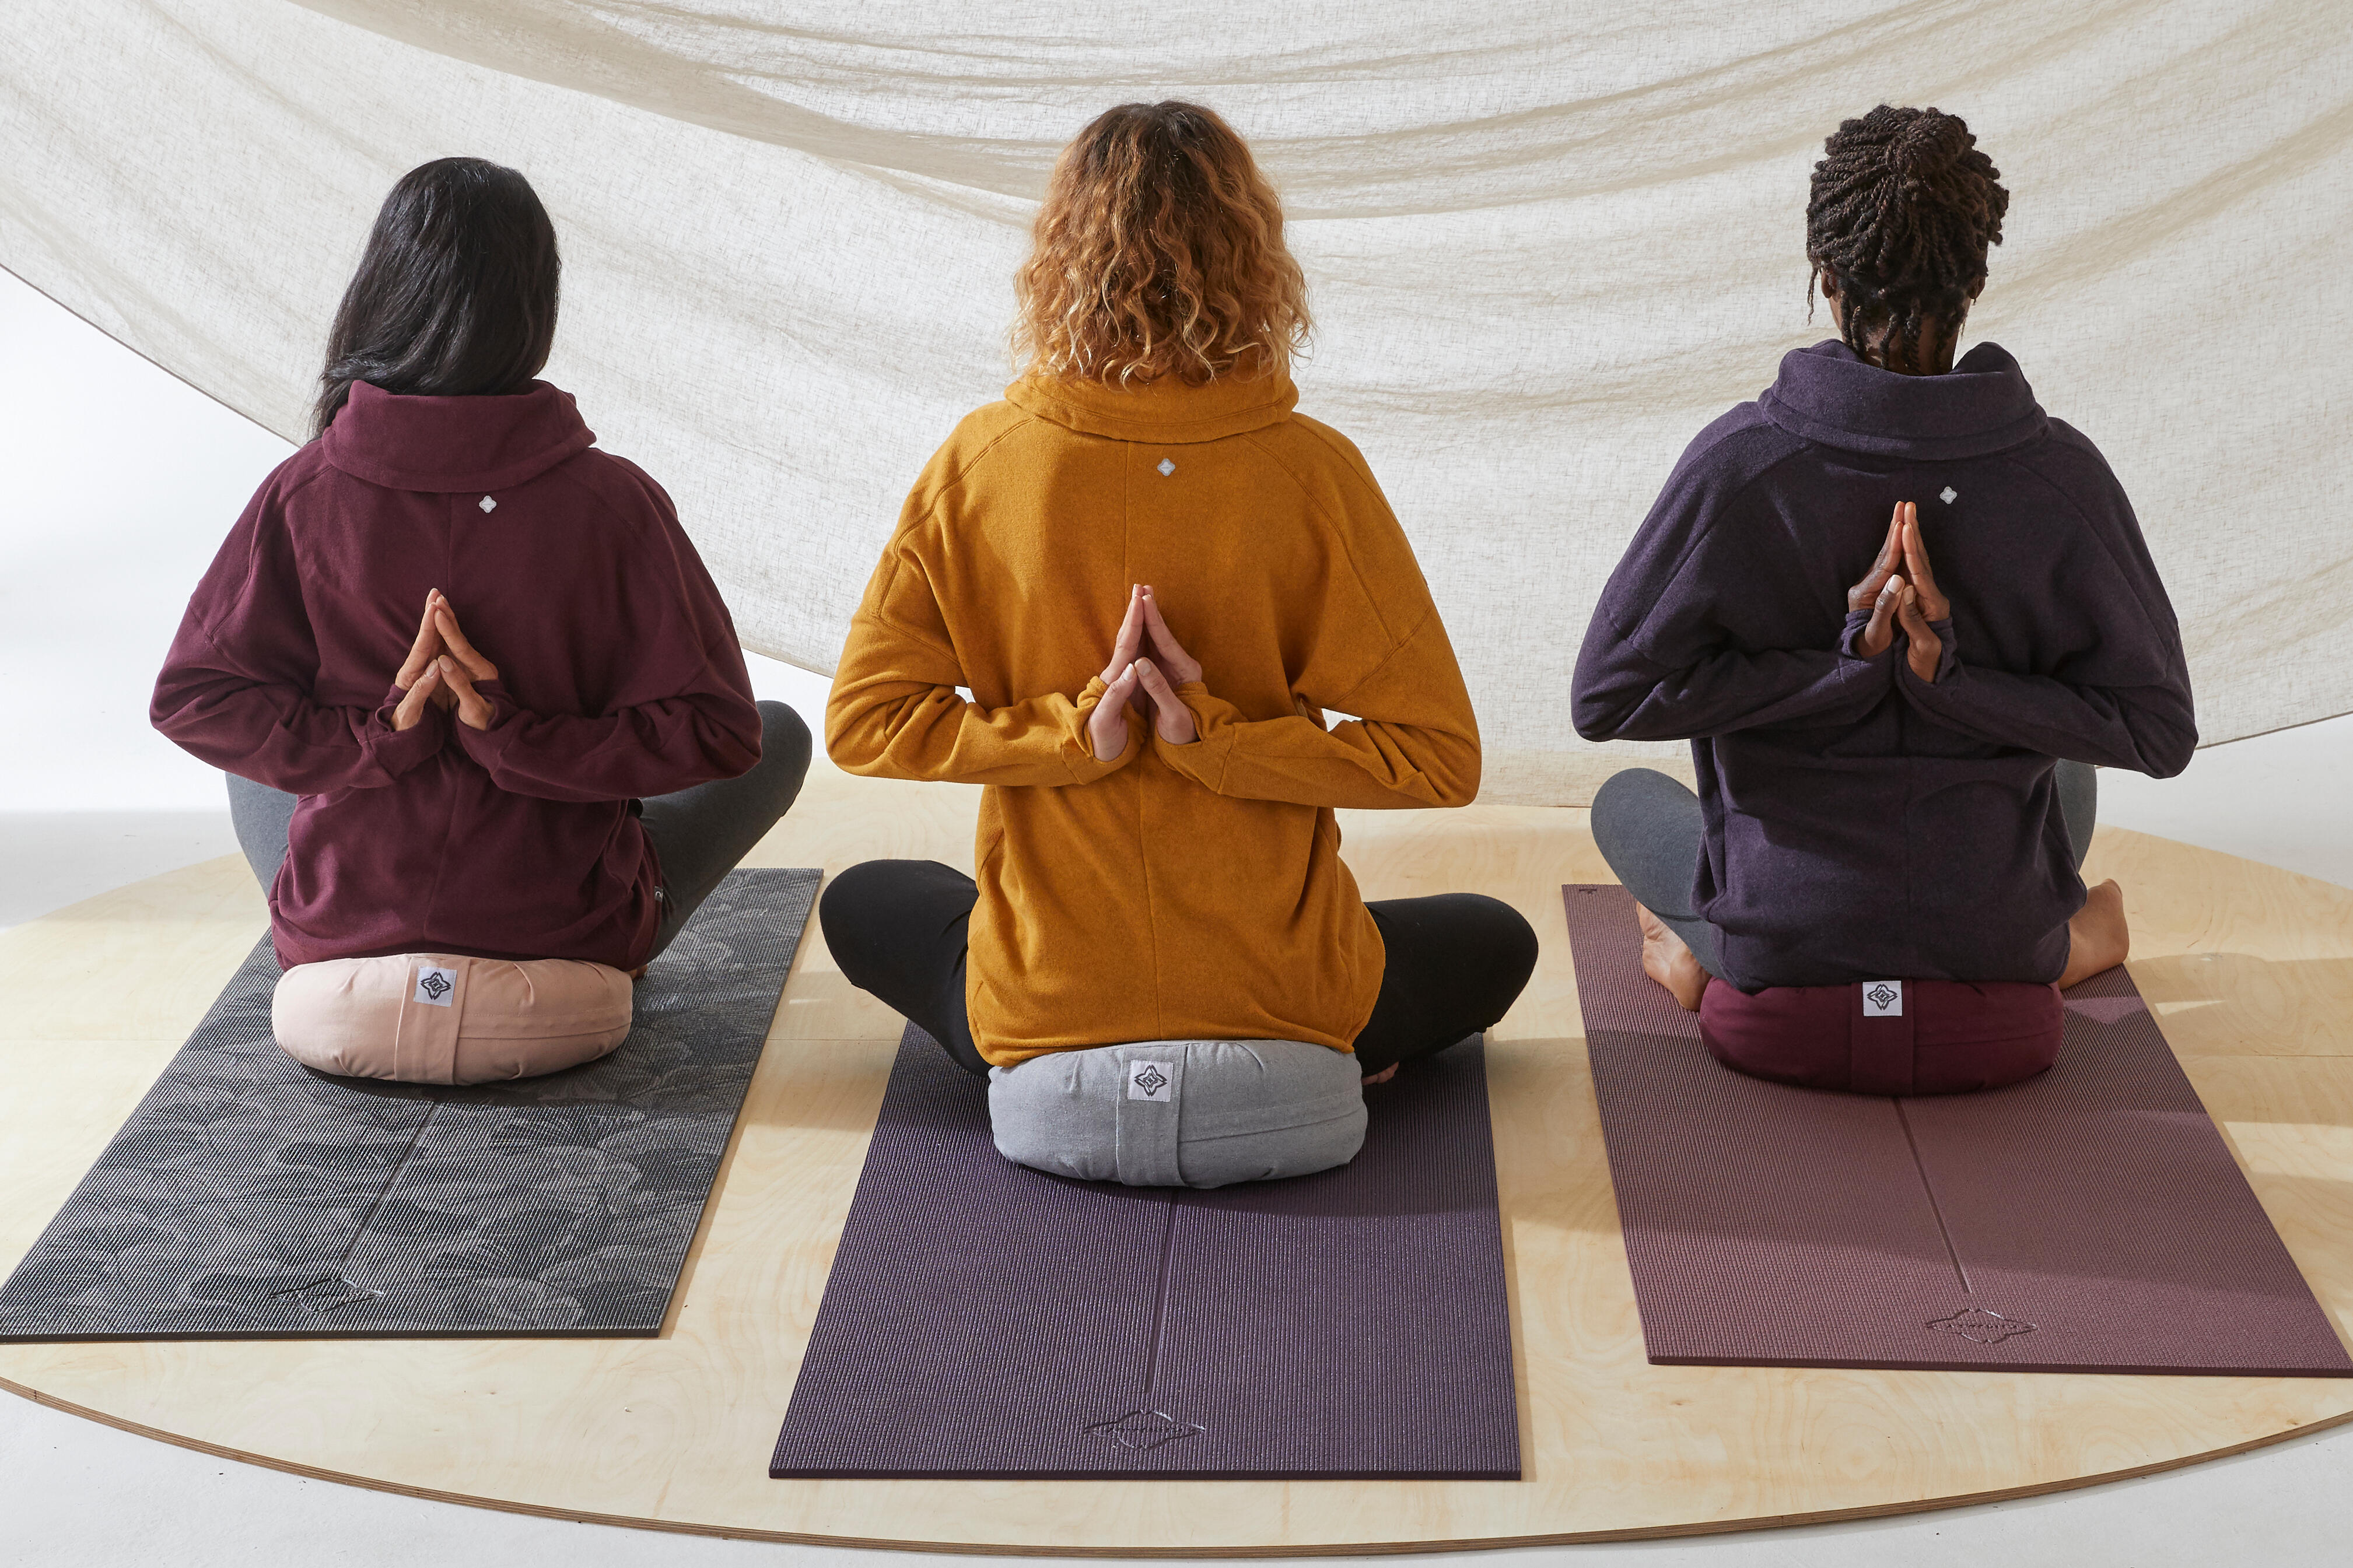 Les Accessoires de Yoga - Yog-attitude